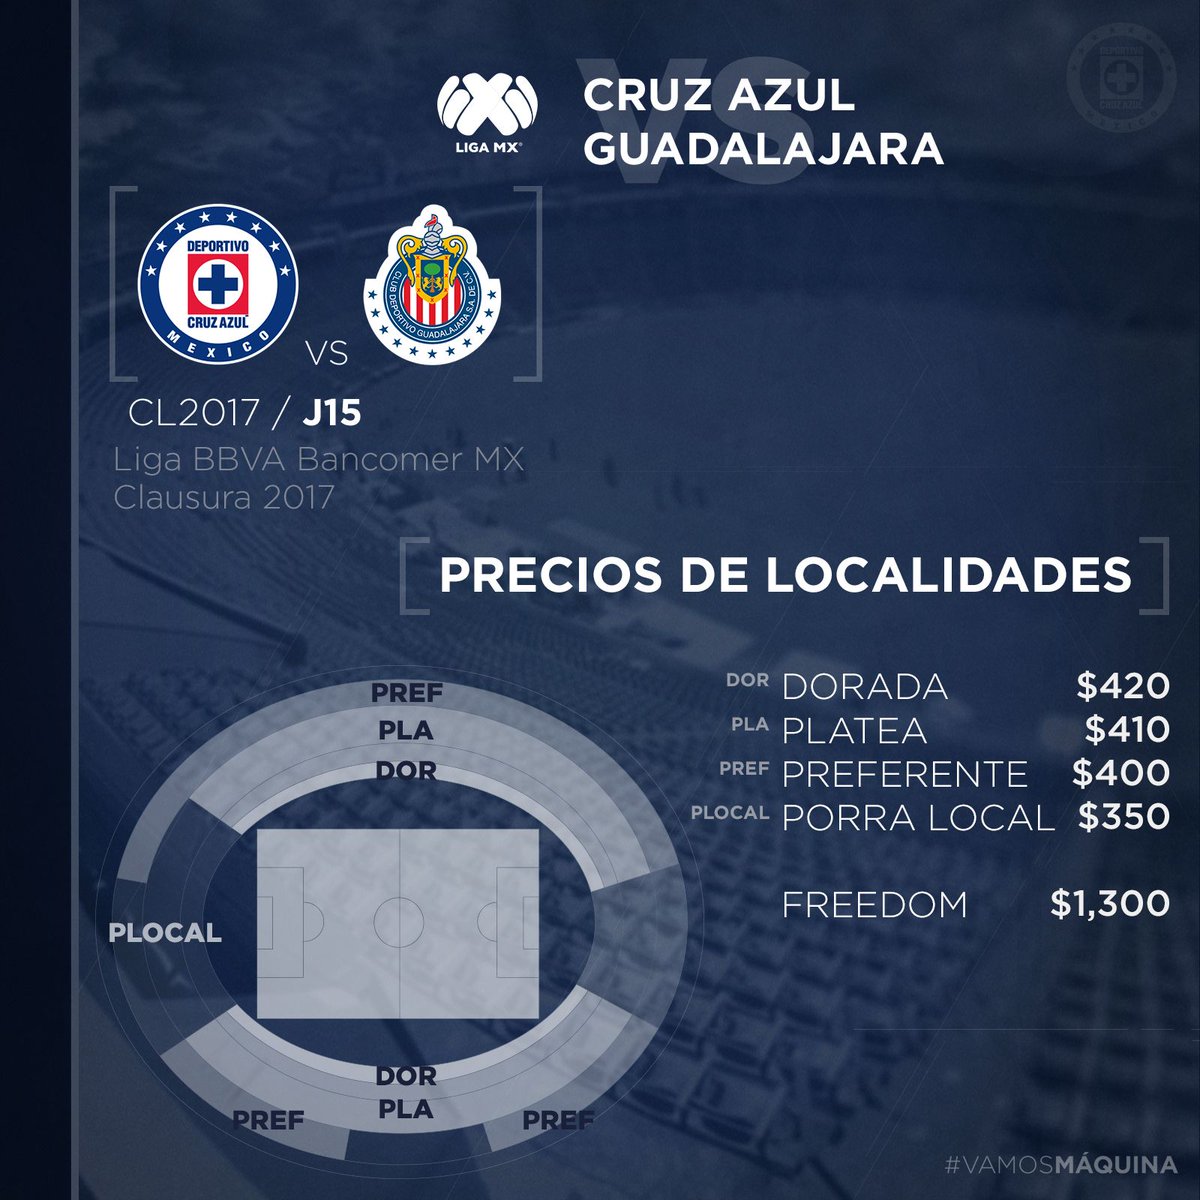 Precios boletos Cruz Azul vs Chivas jornada 15 futbol mexicano